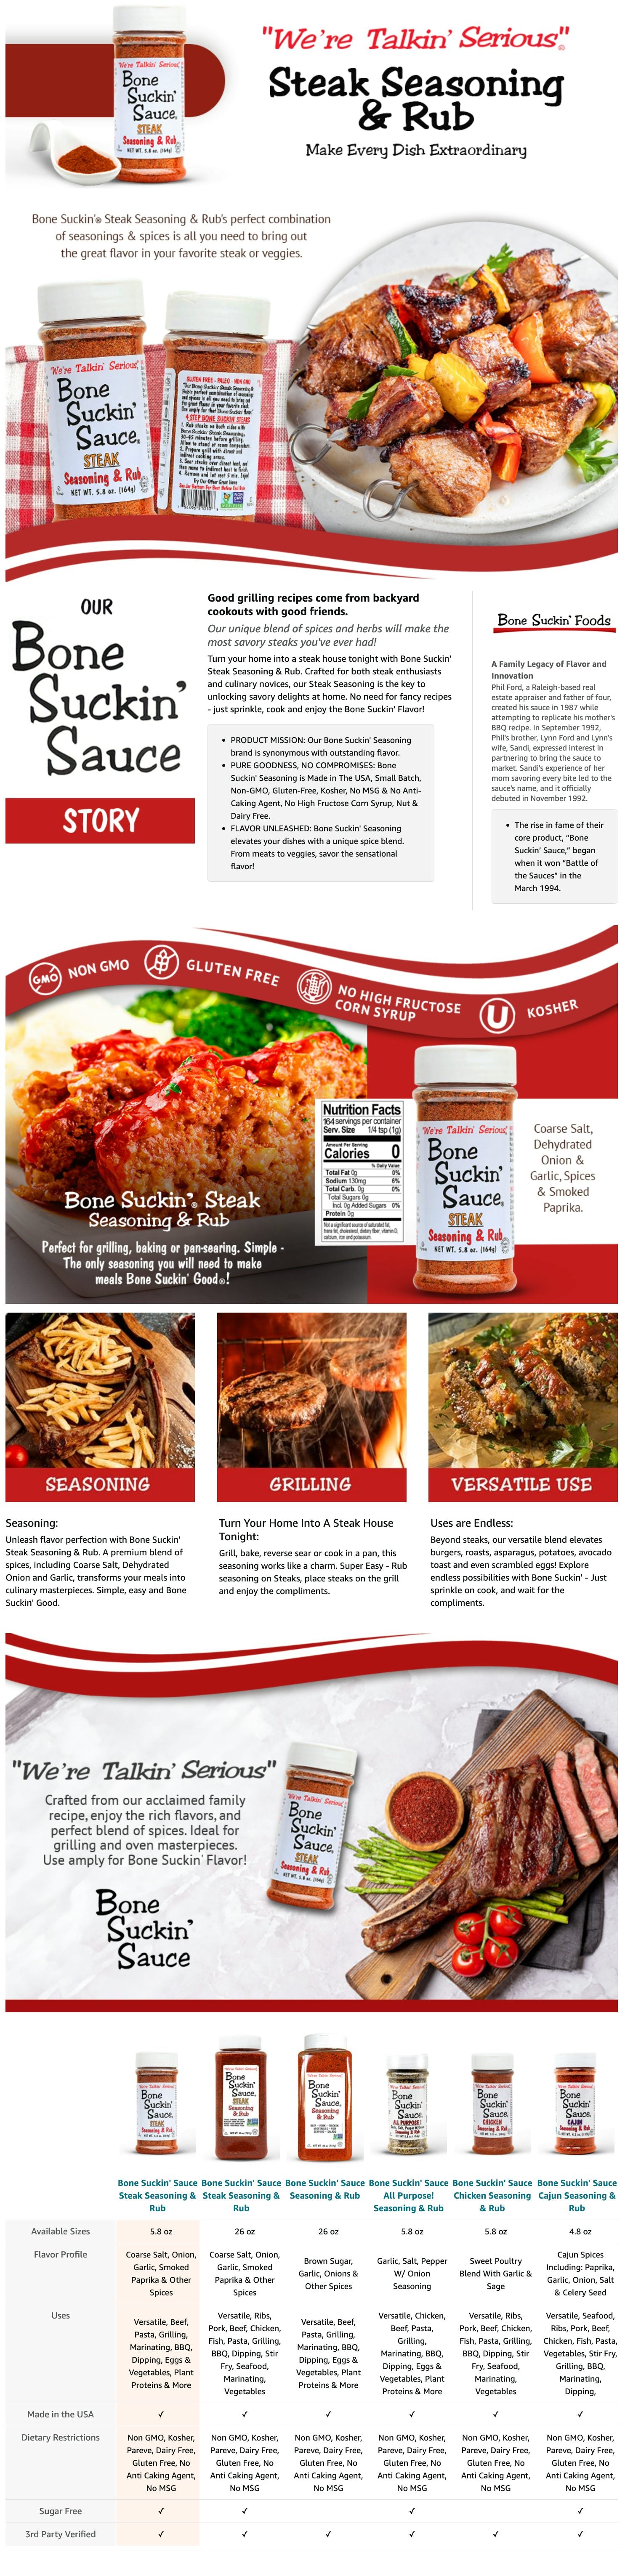 Bone Suckin’® Steak Seasoning & Rub, 5.8 oz